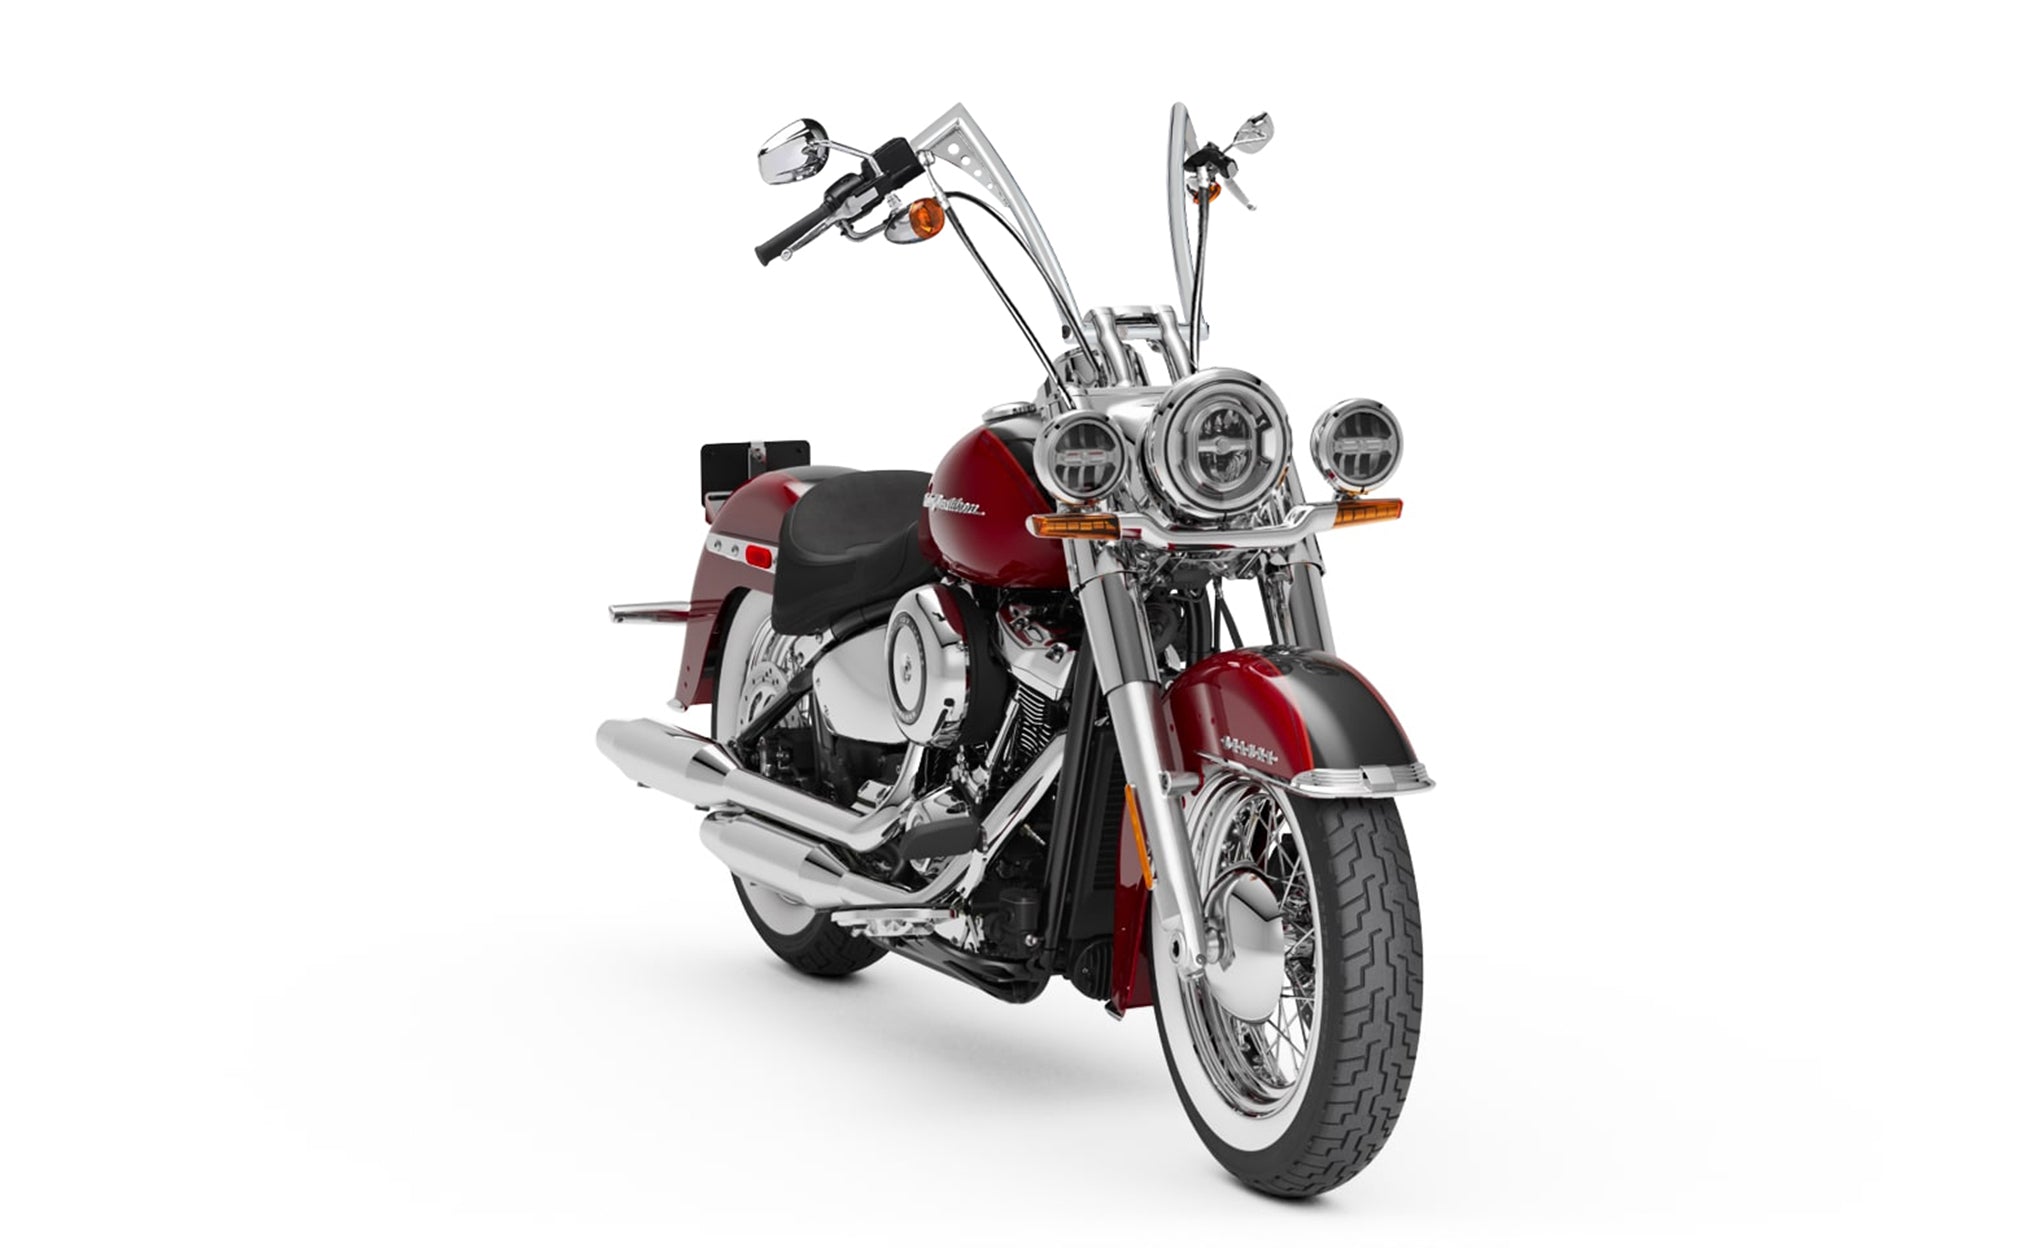 Viking Iron Born 12" Handlebar For Harley Softail Deluxe FLSTN Chrome Bag on Bike View @expand